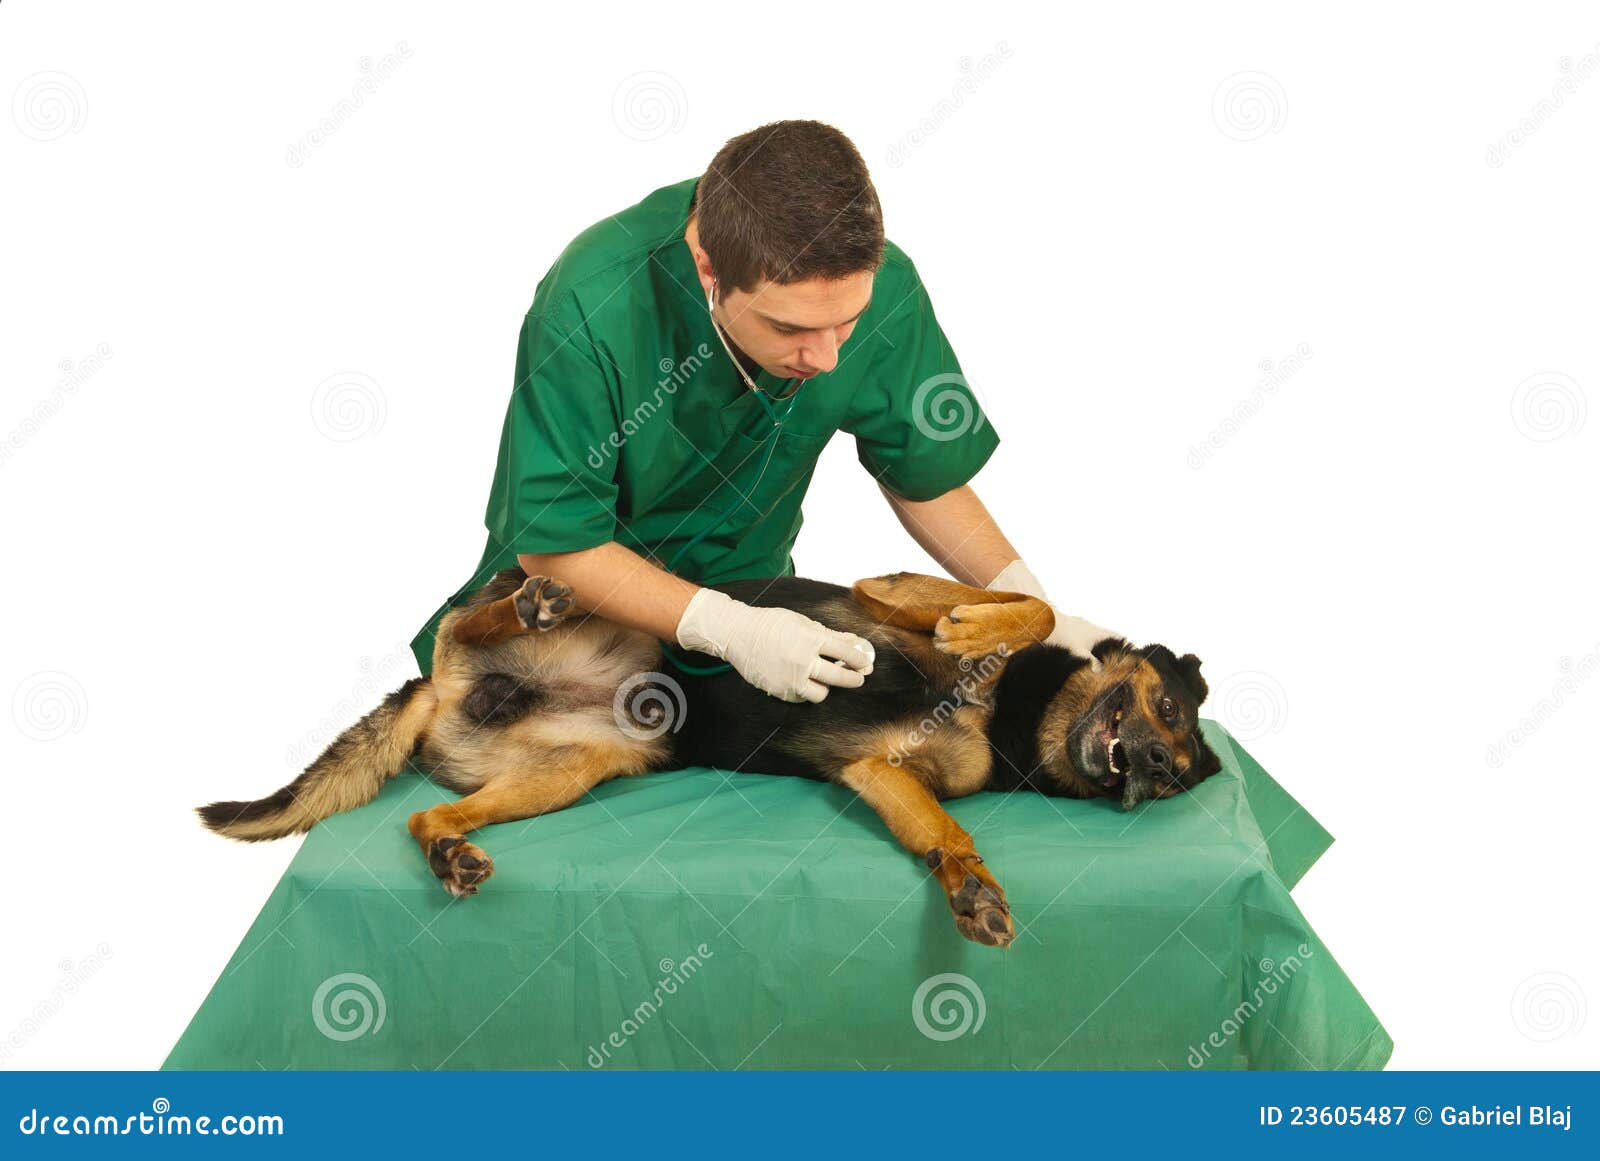 doctor vet examine dog